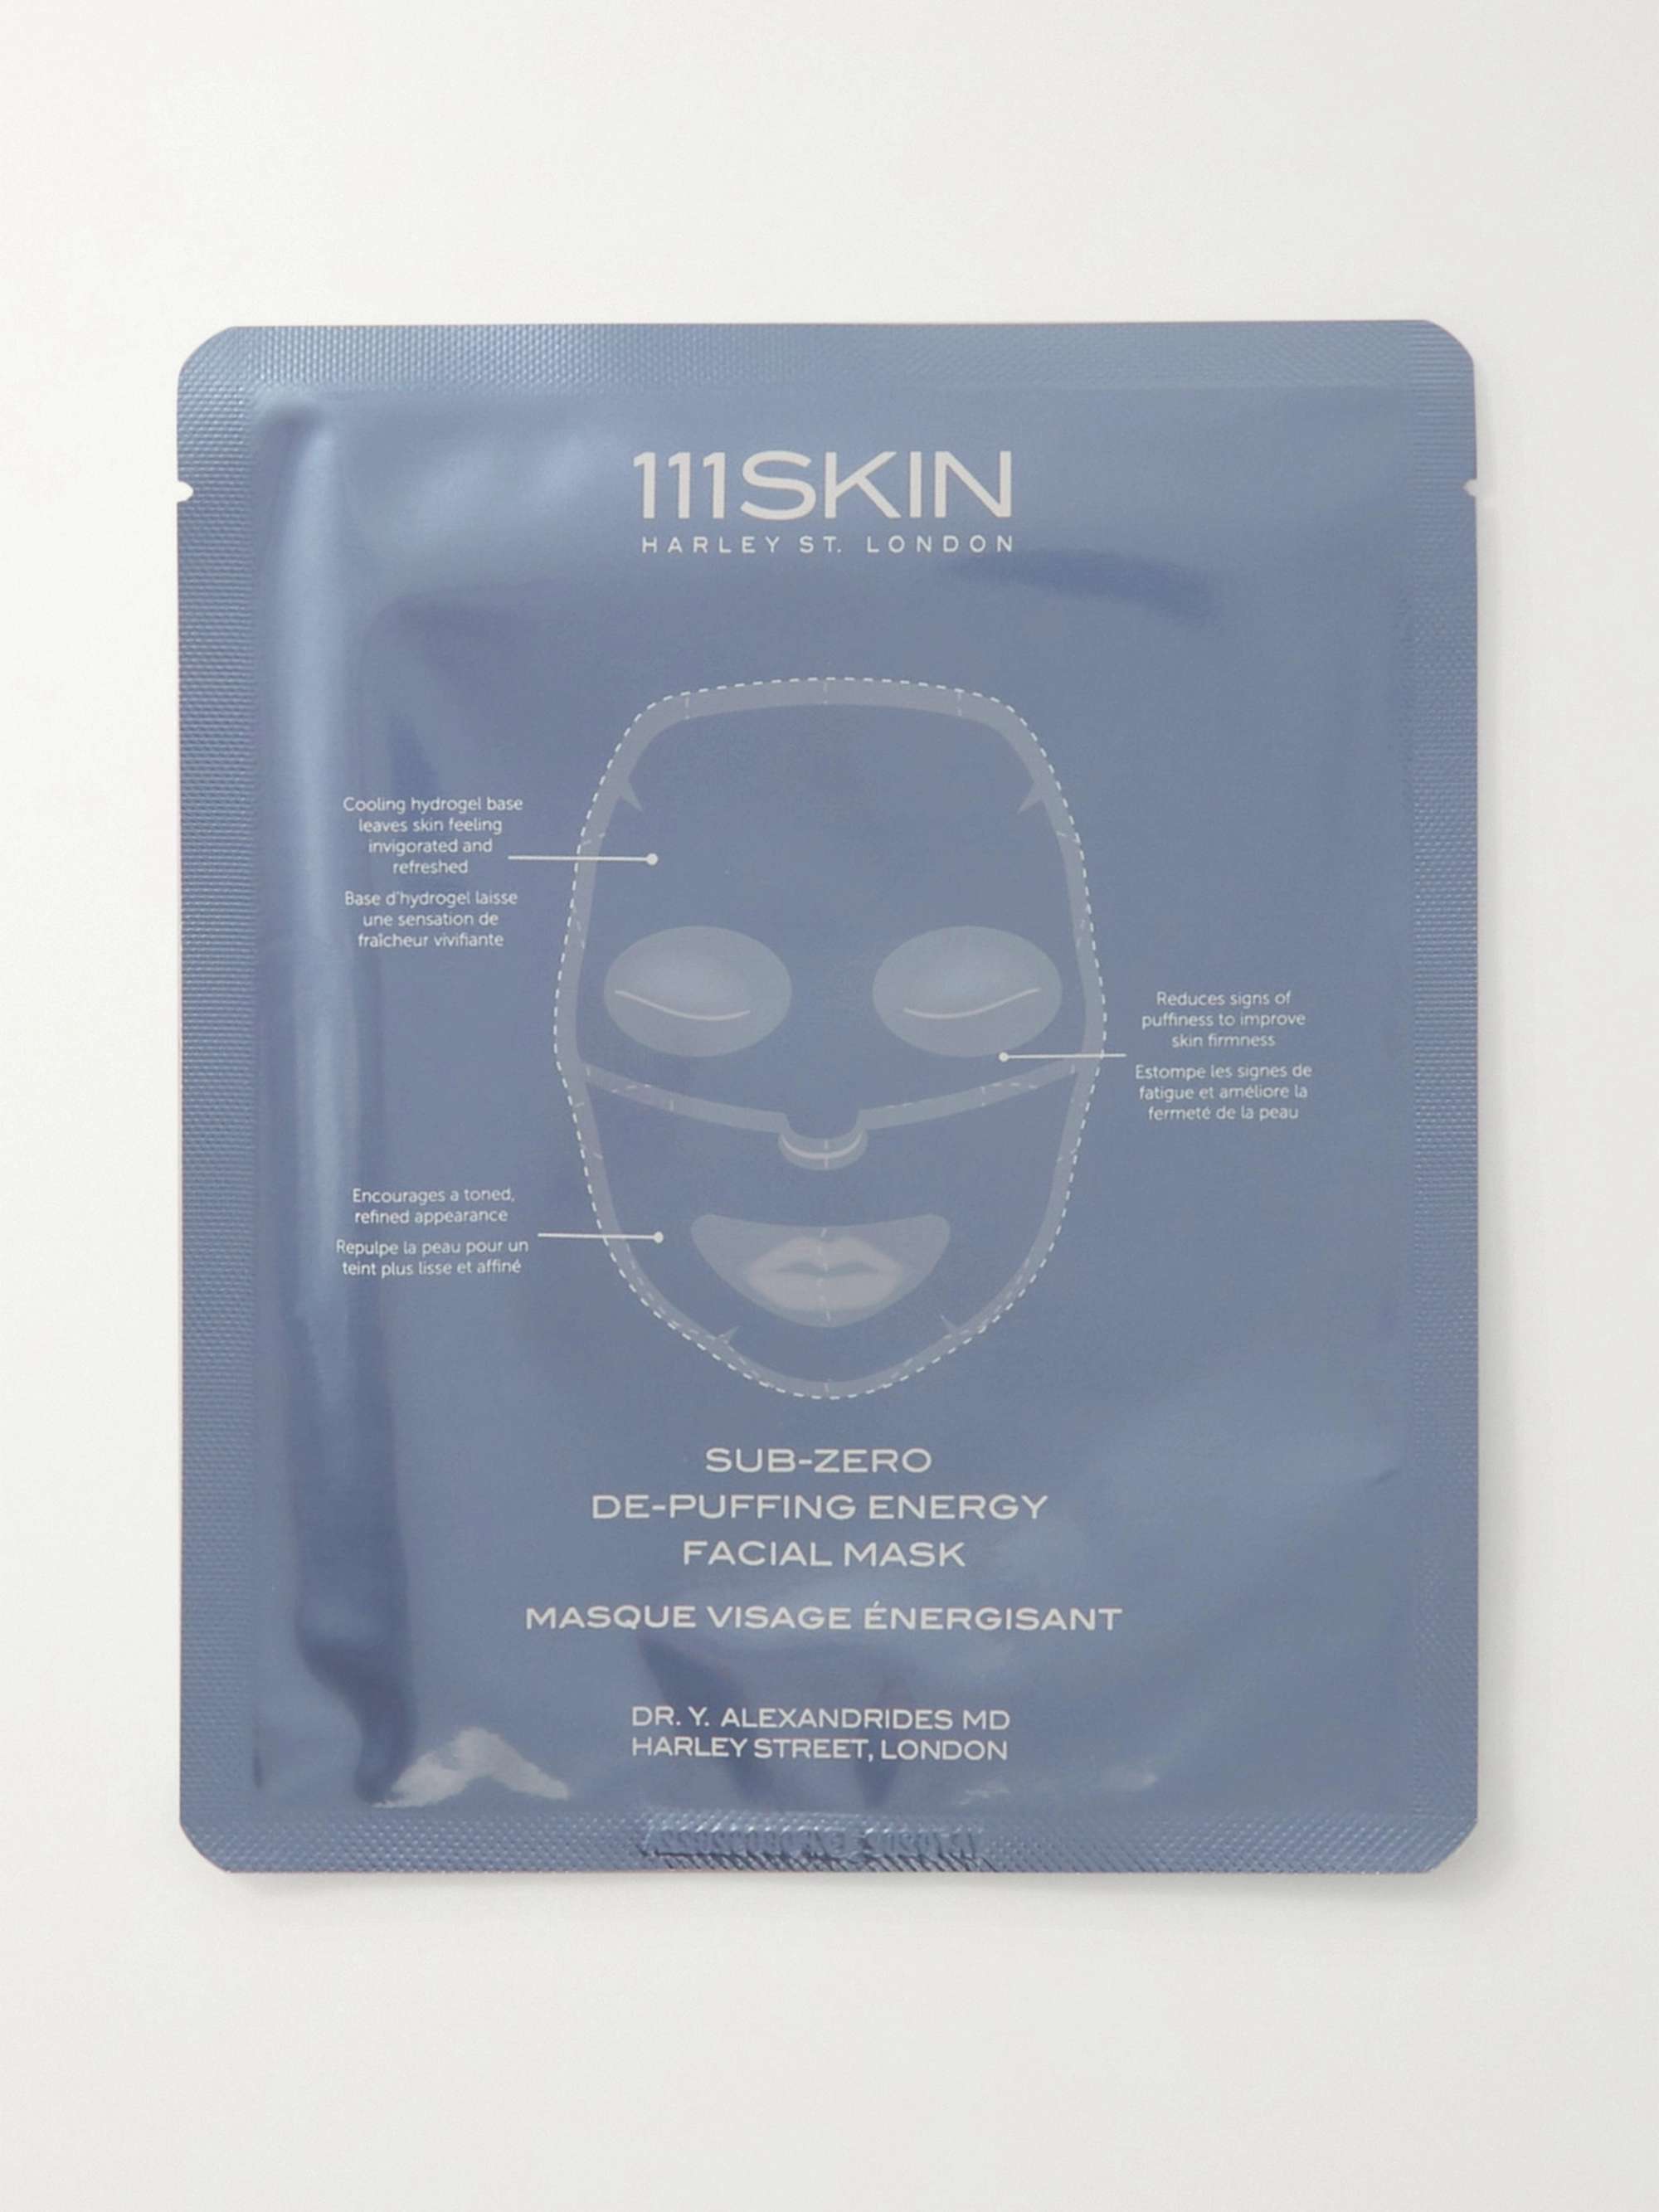 111SKIN Sub-Zero De-Puffing Energy Facial Masks, 5 x 30ml